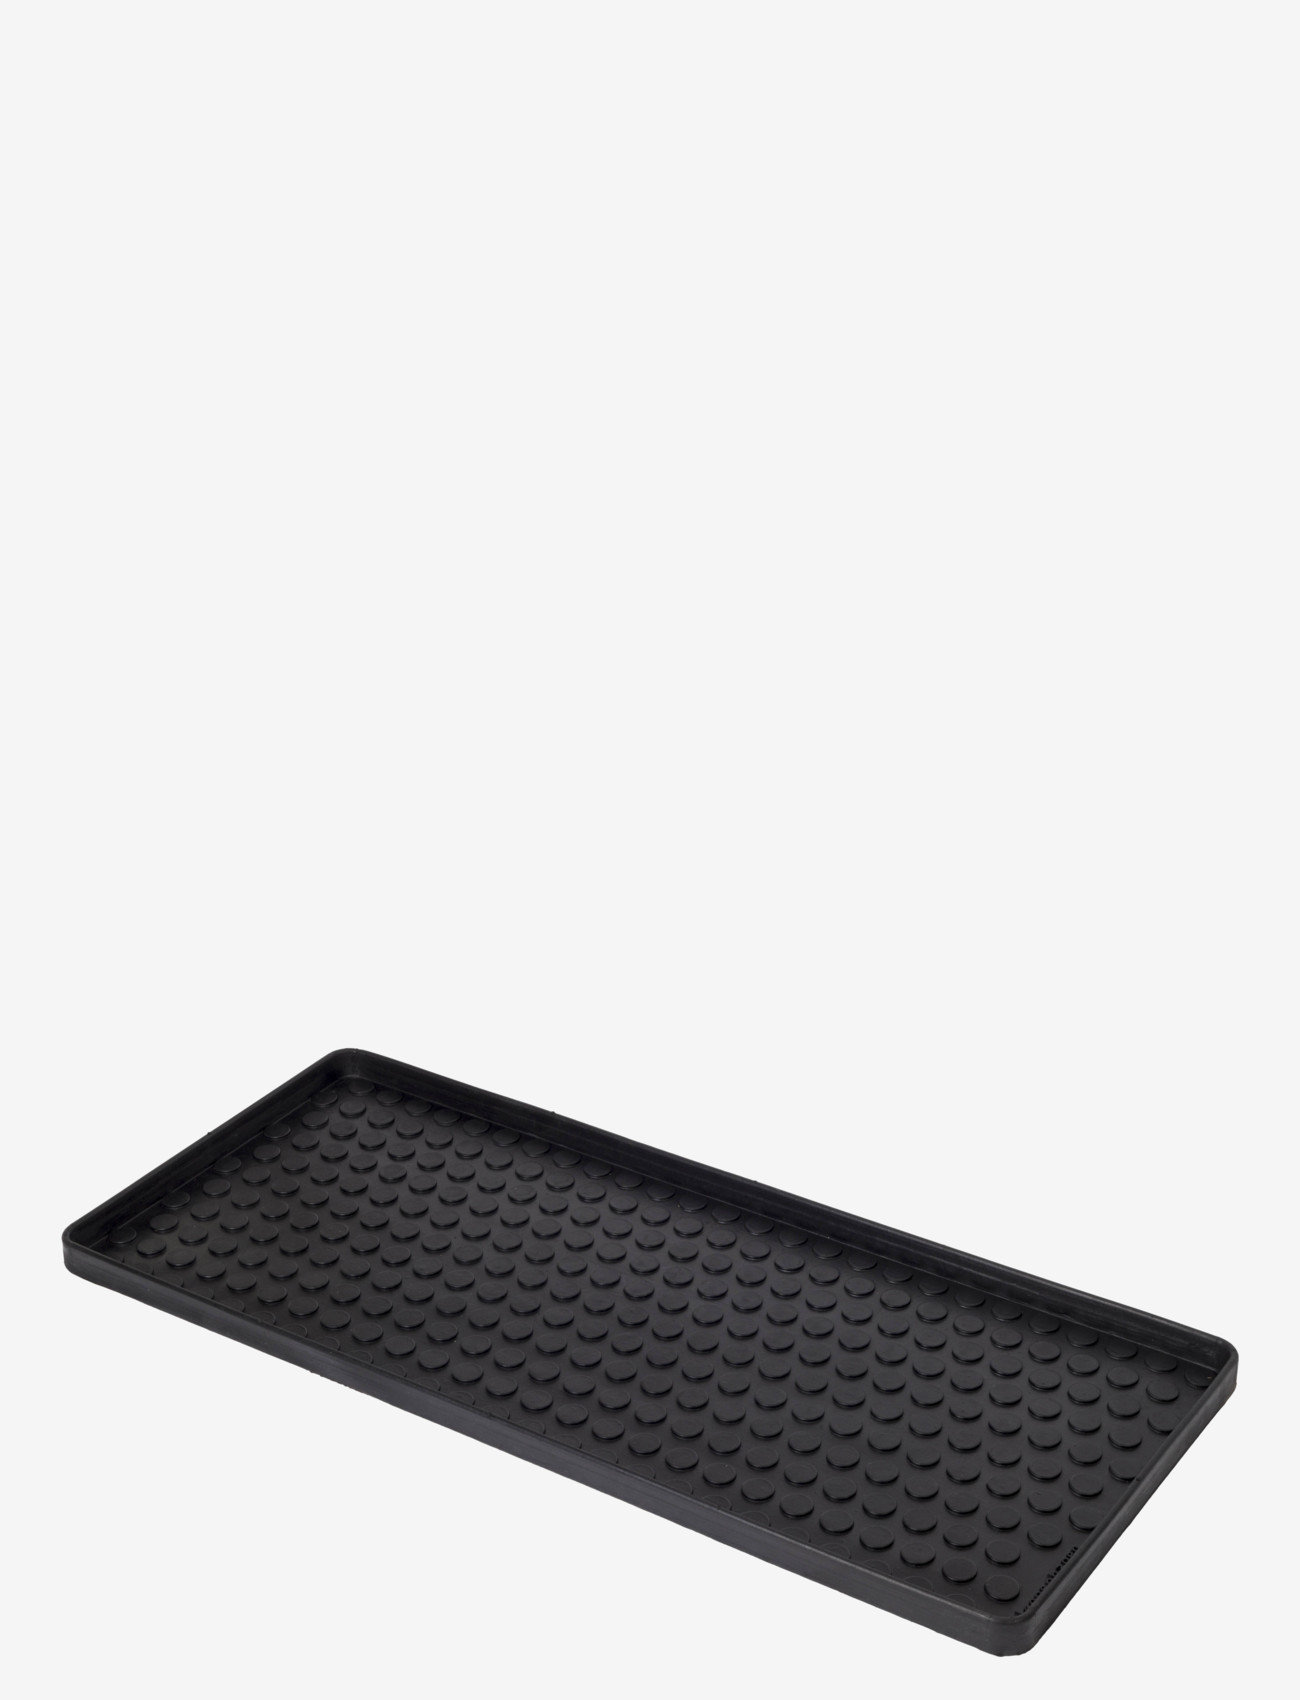 tica copenhagen - Shoe and boot tray rubber, L:88x38x3 cm - mājai - dot design - 1